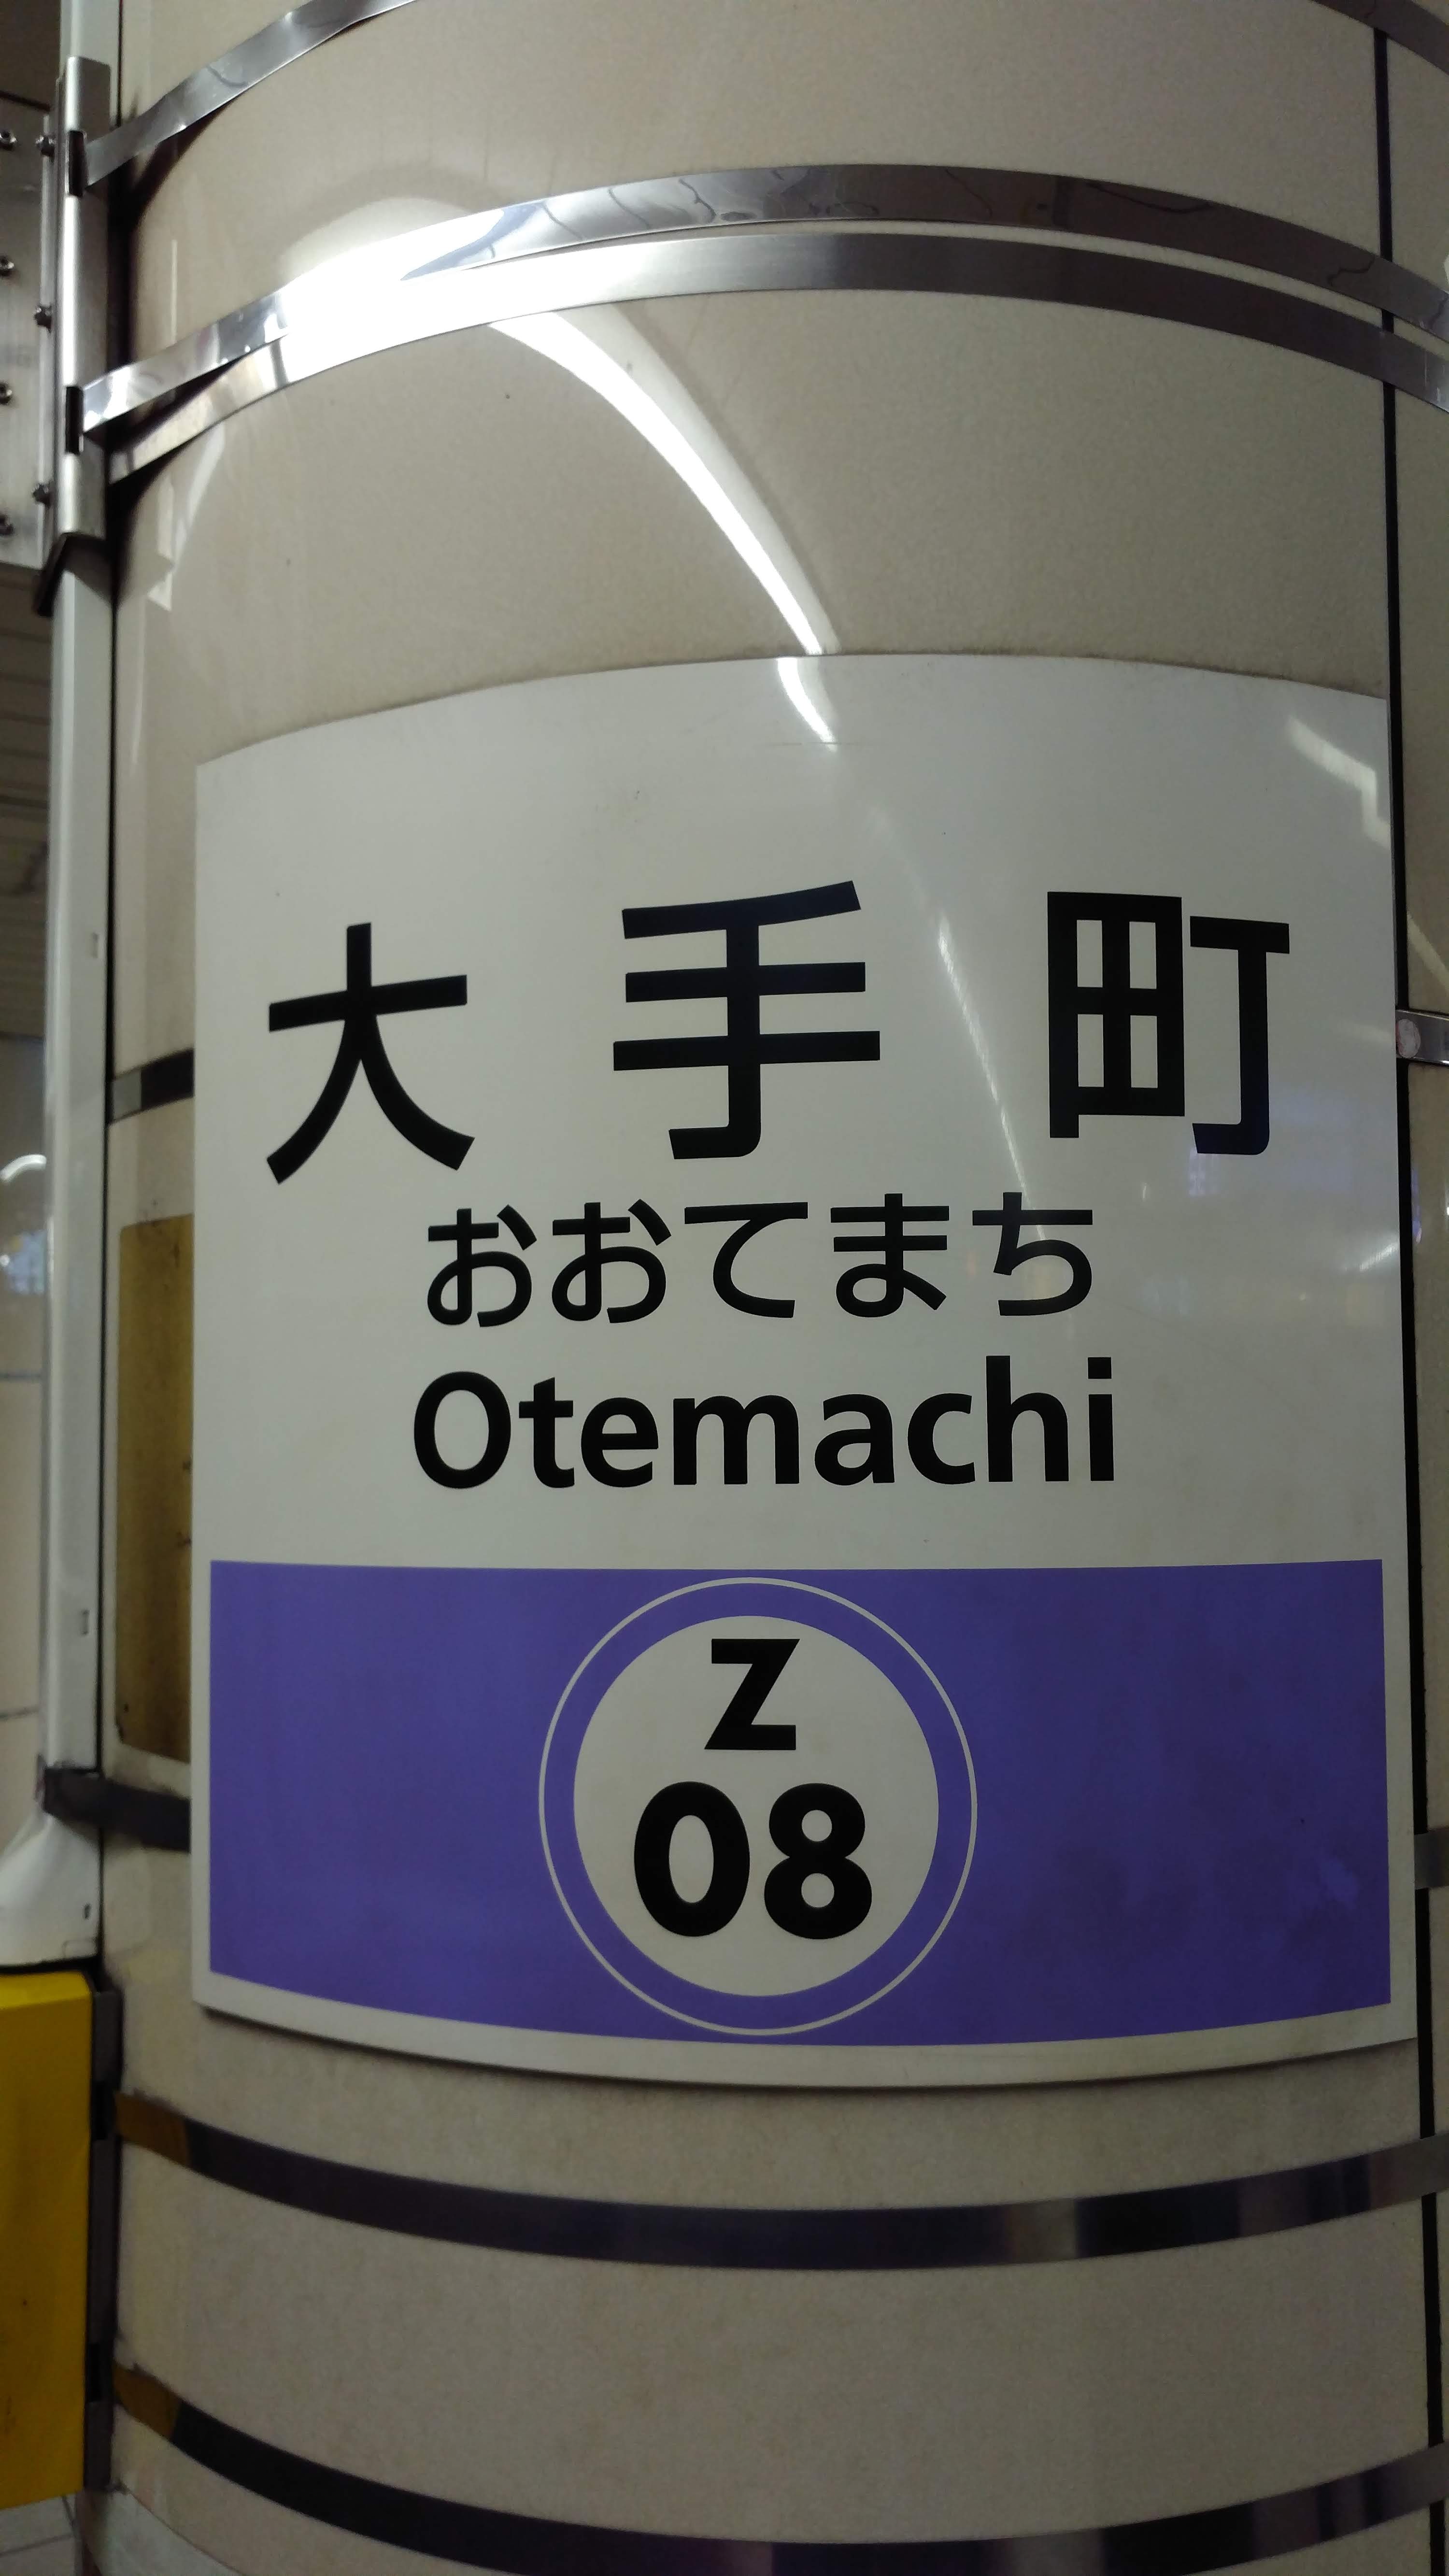 otemachi station sign z08